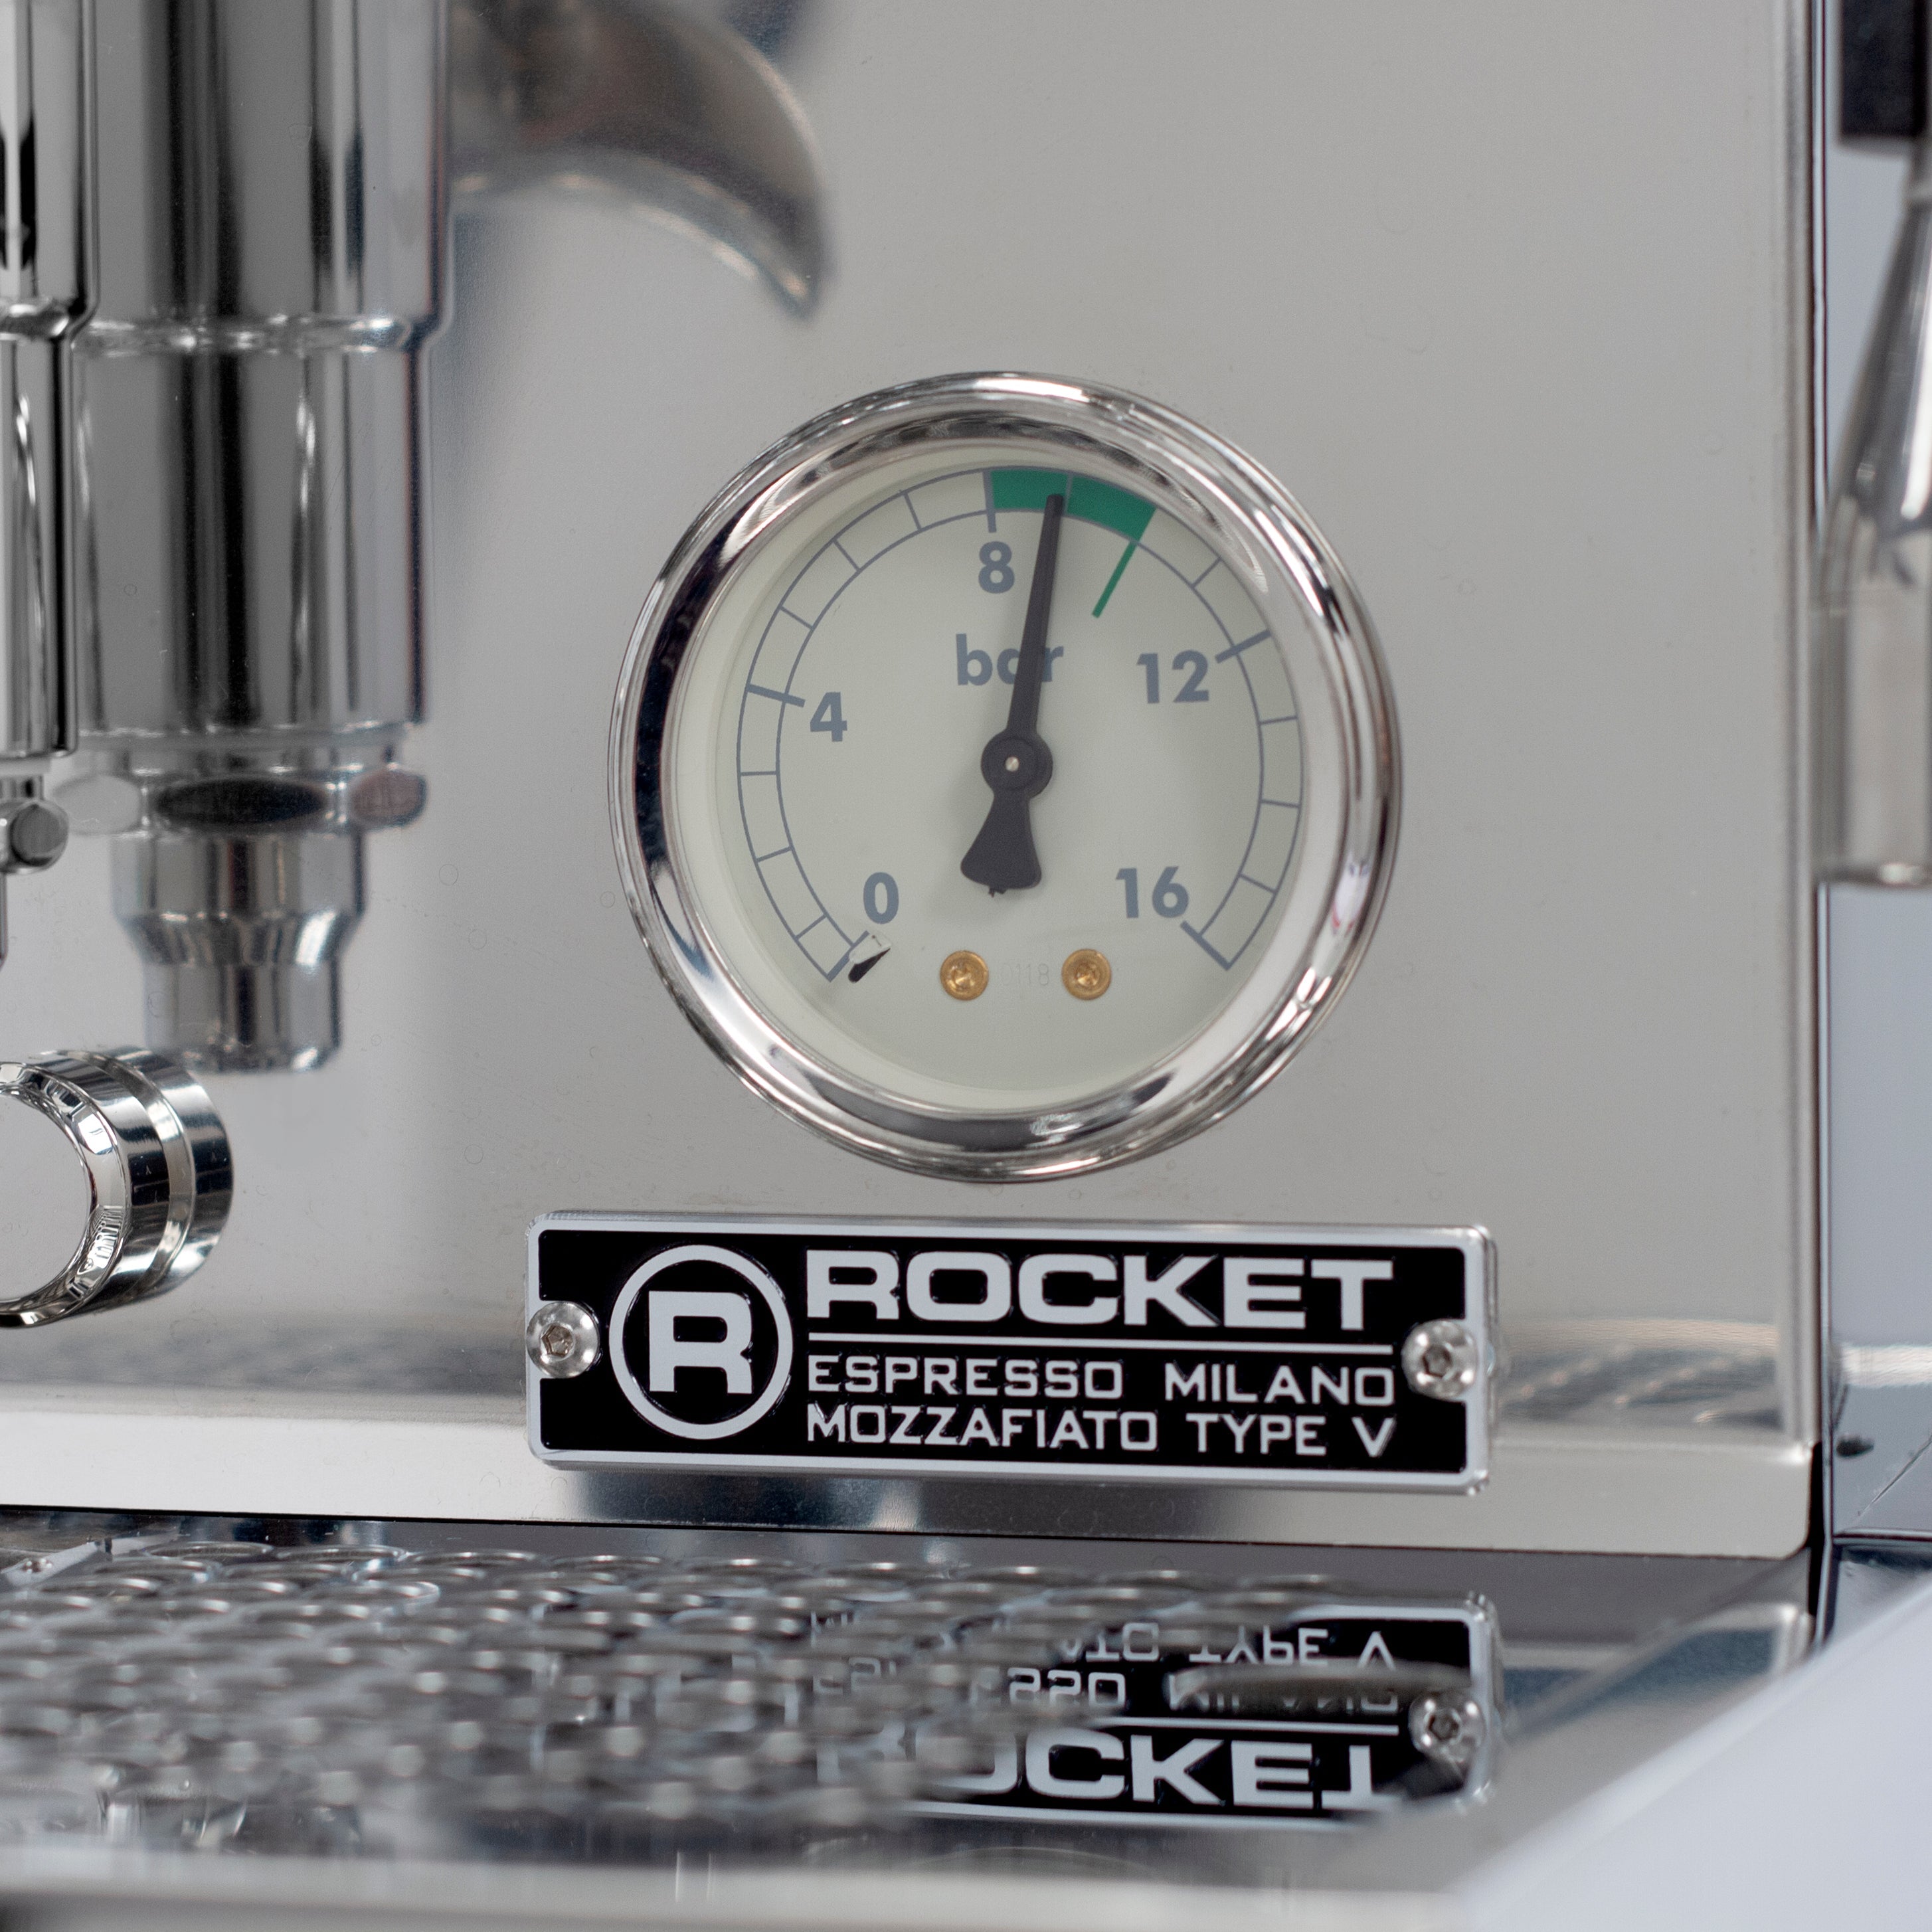 Rocket Espresso Mozzafiato Cronometro V Espresso Machine with Flow 